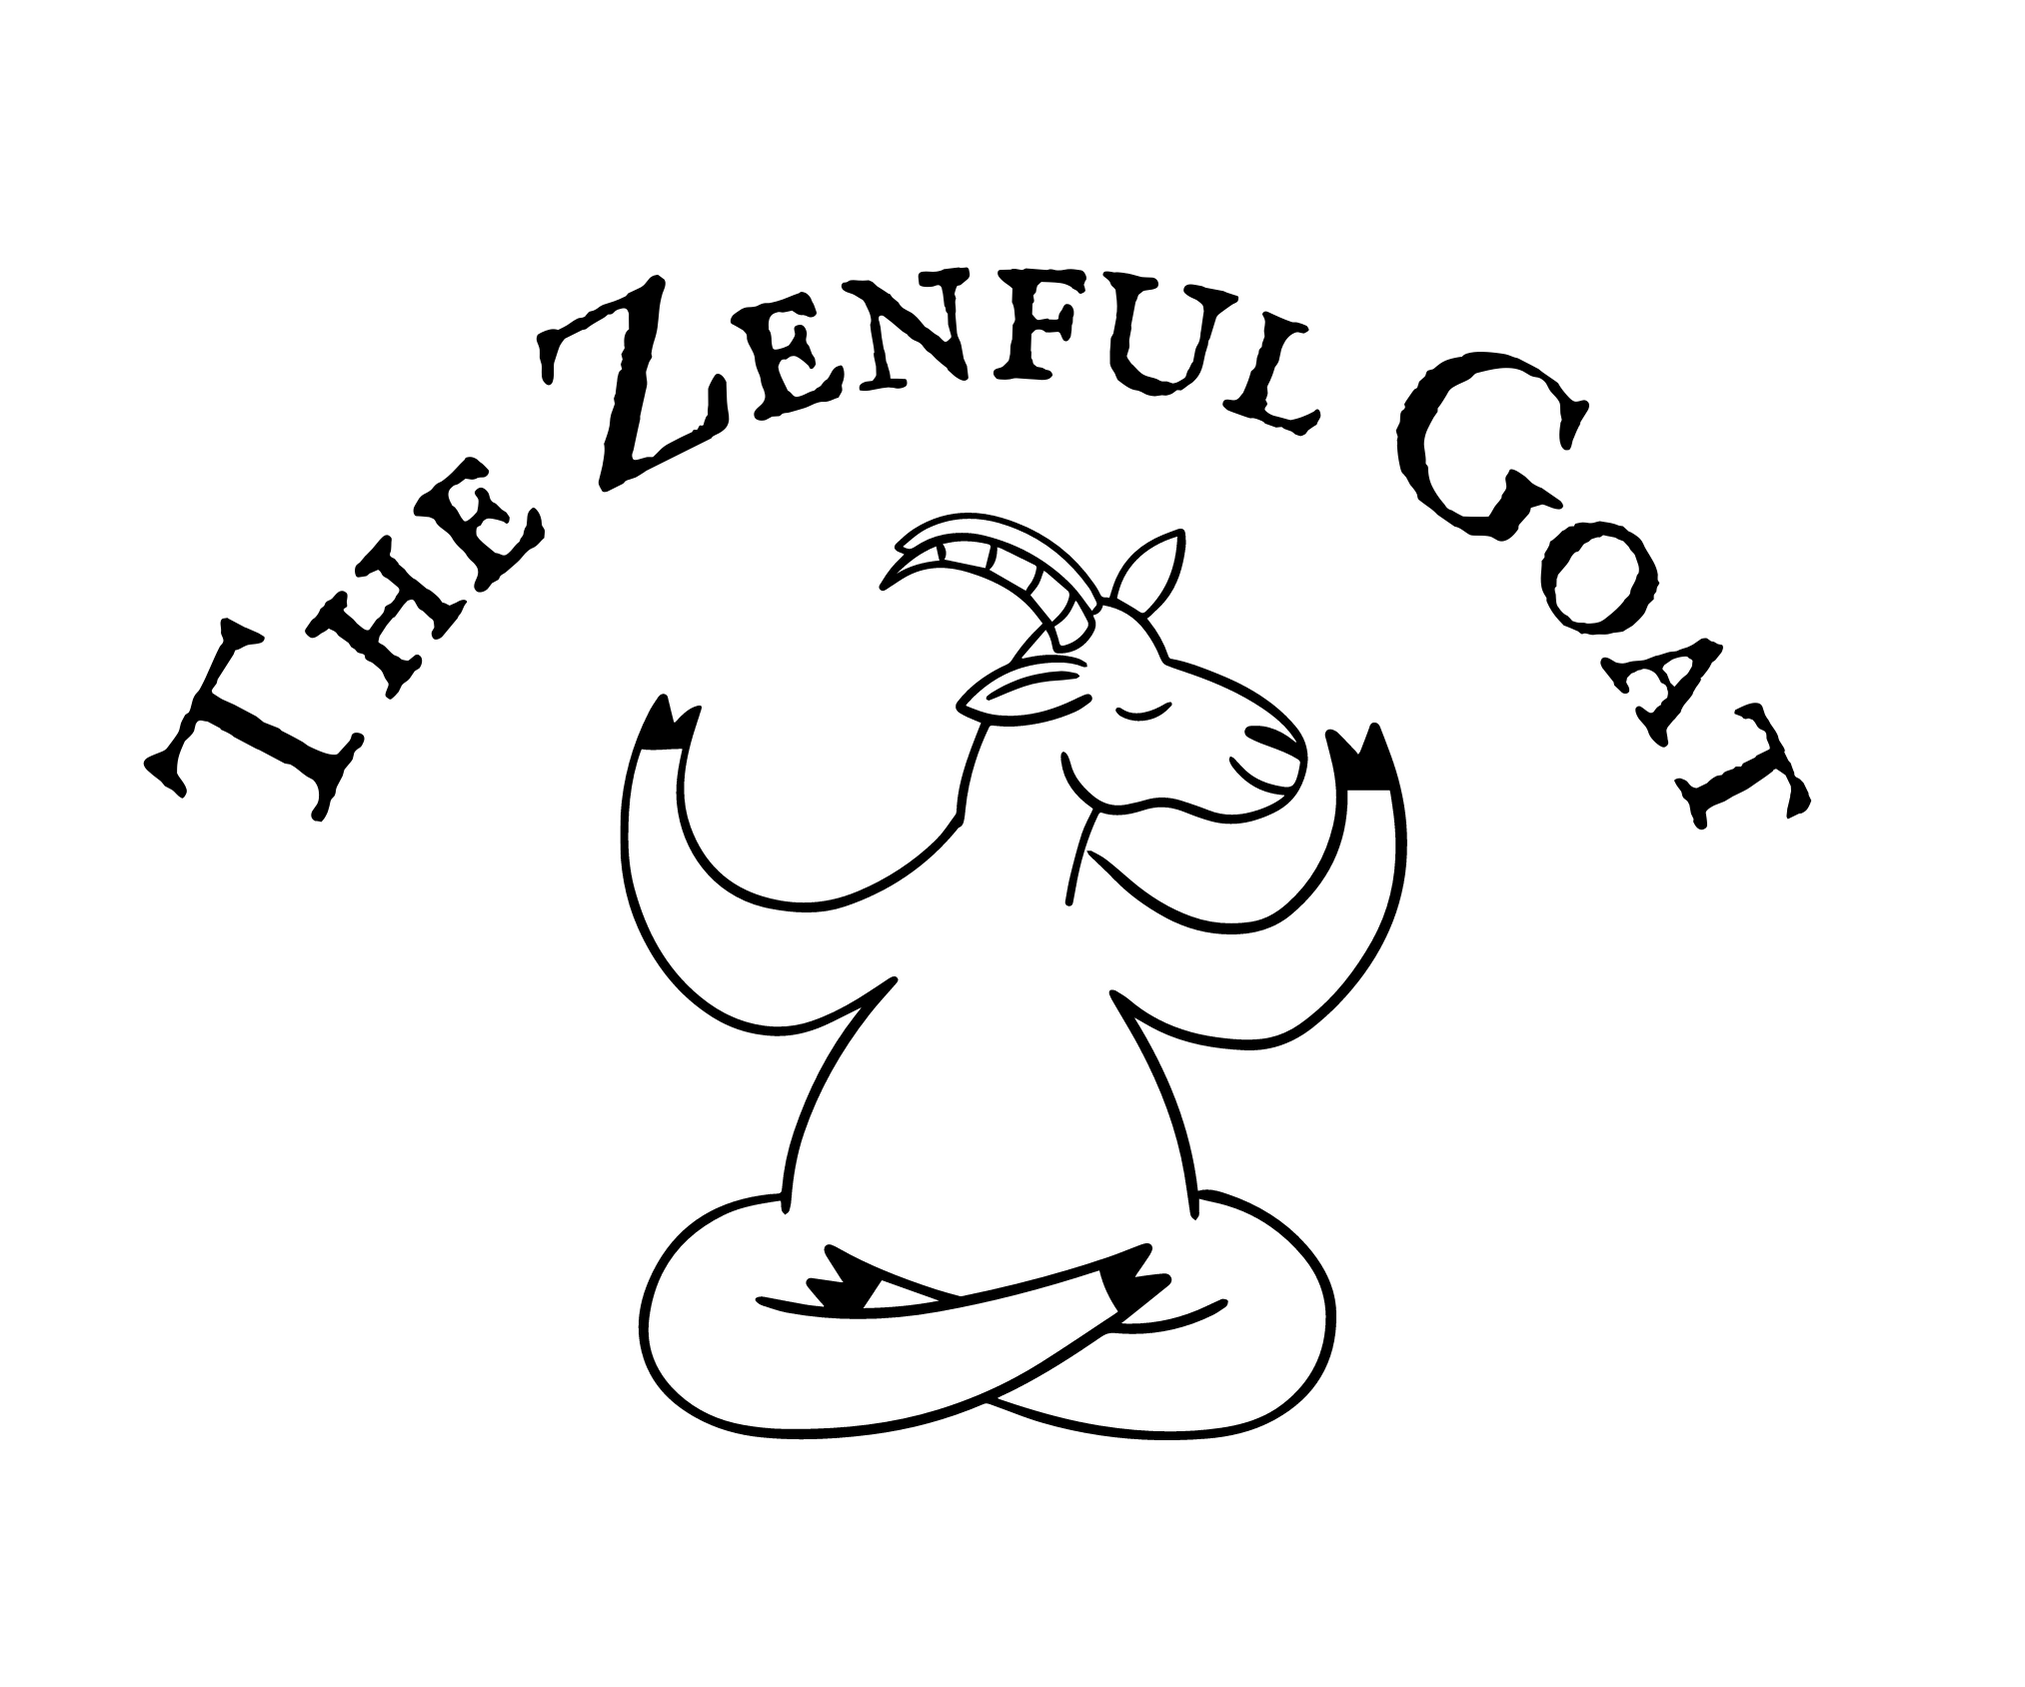 The Zenful Goat